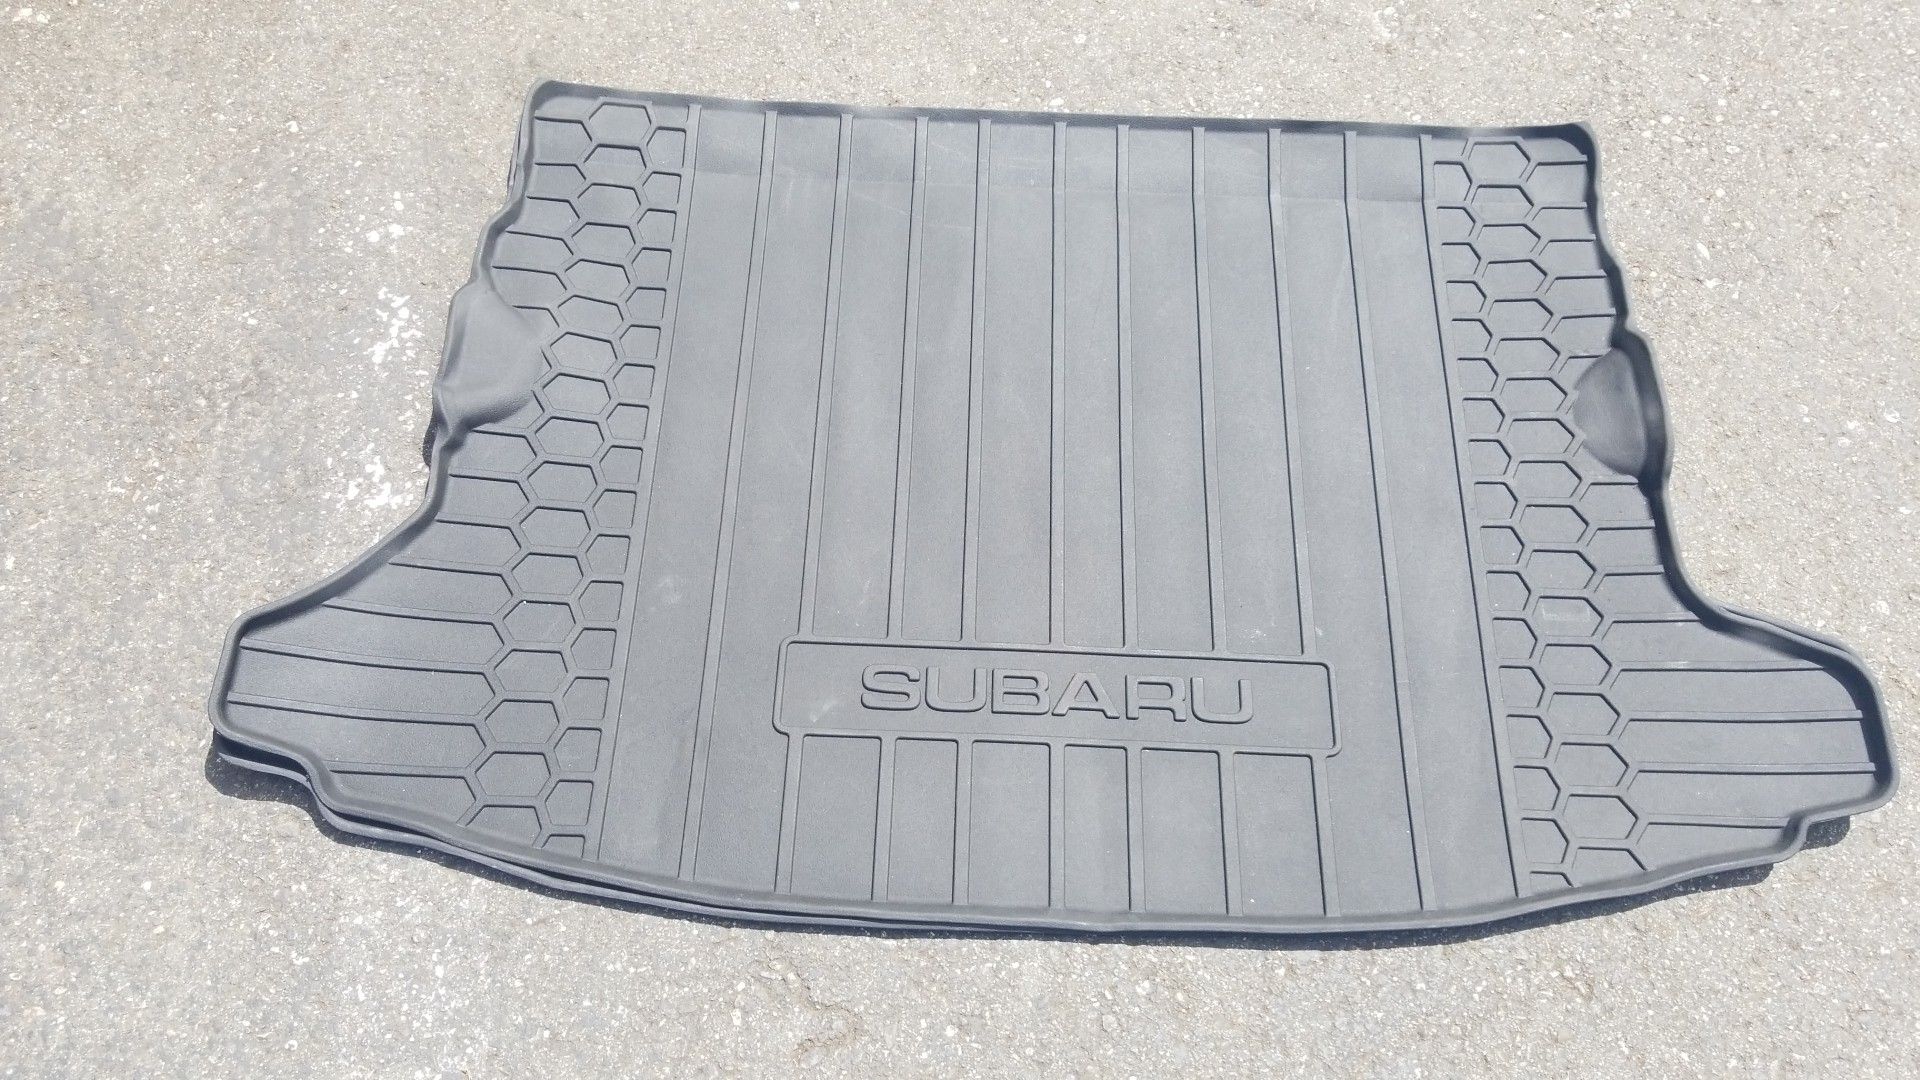 Subaru cargo mat